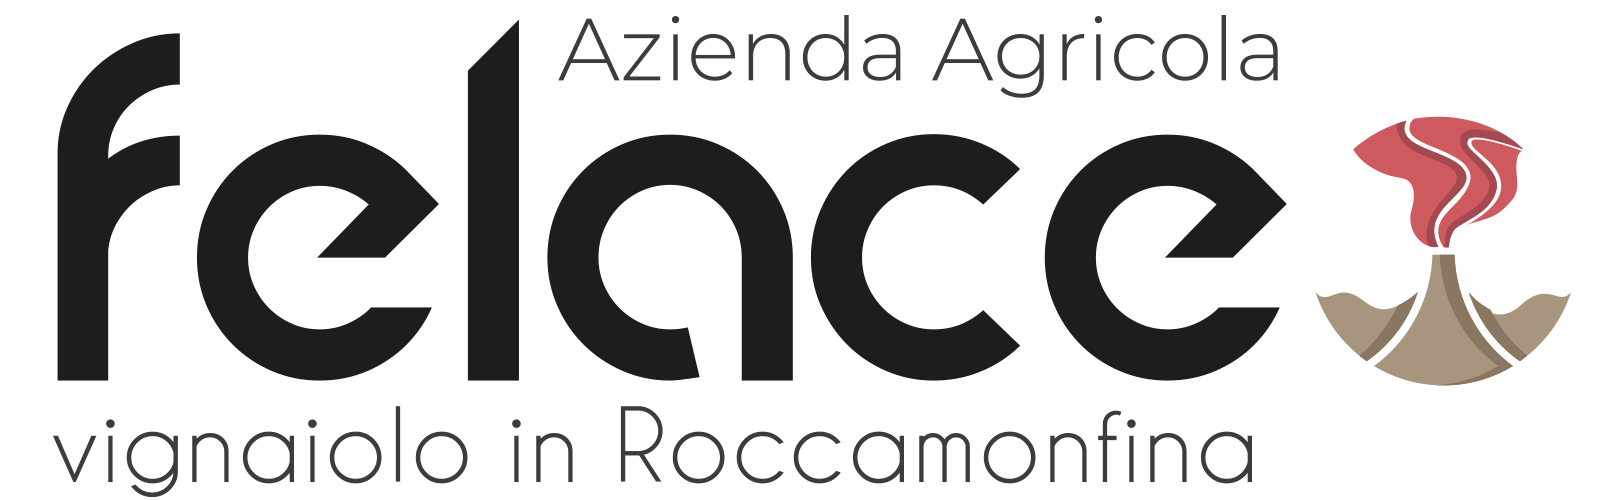 Azienda Agricola Felace